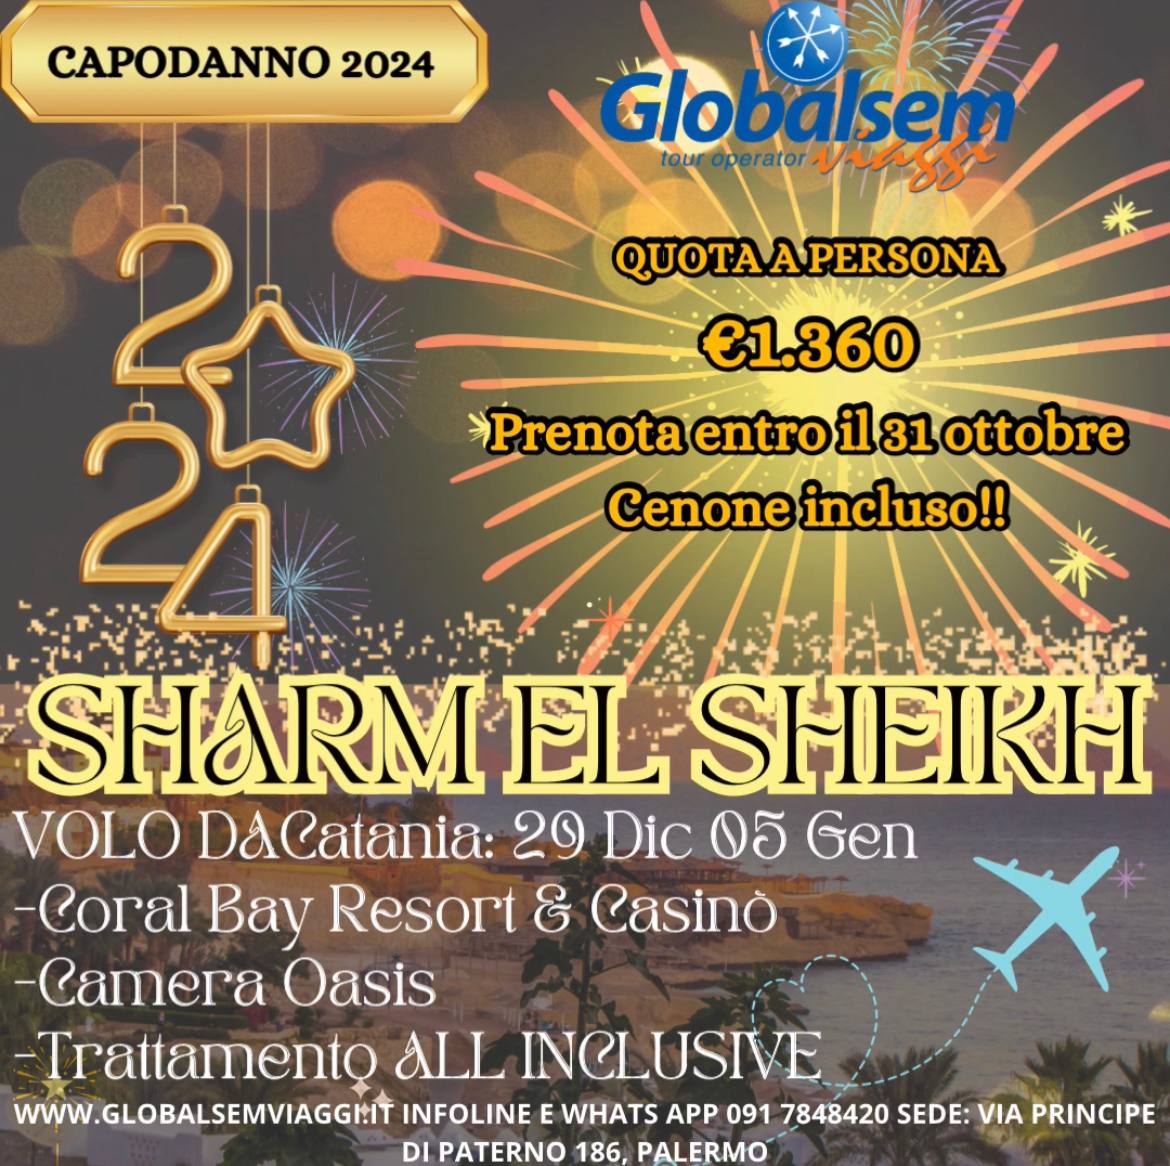 Capodanno SHARM EL SHEIKH 2024...PARTENZA DA CATANIA, dal 29 DIC al 5 GEN 2024